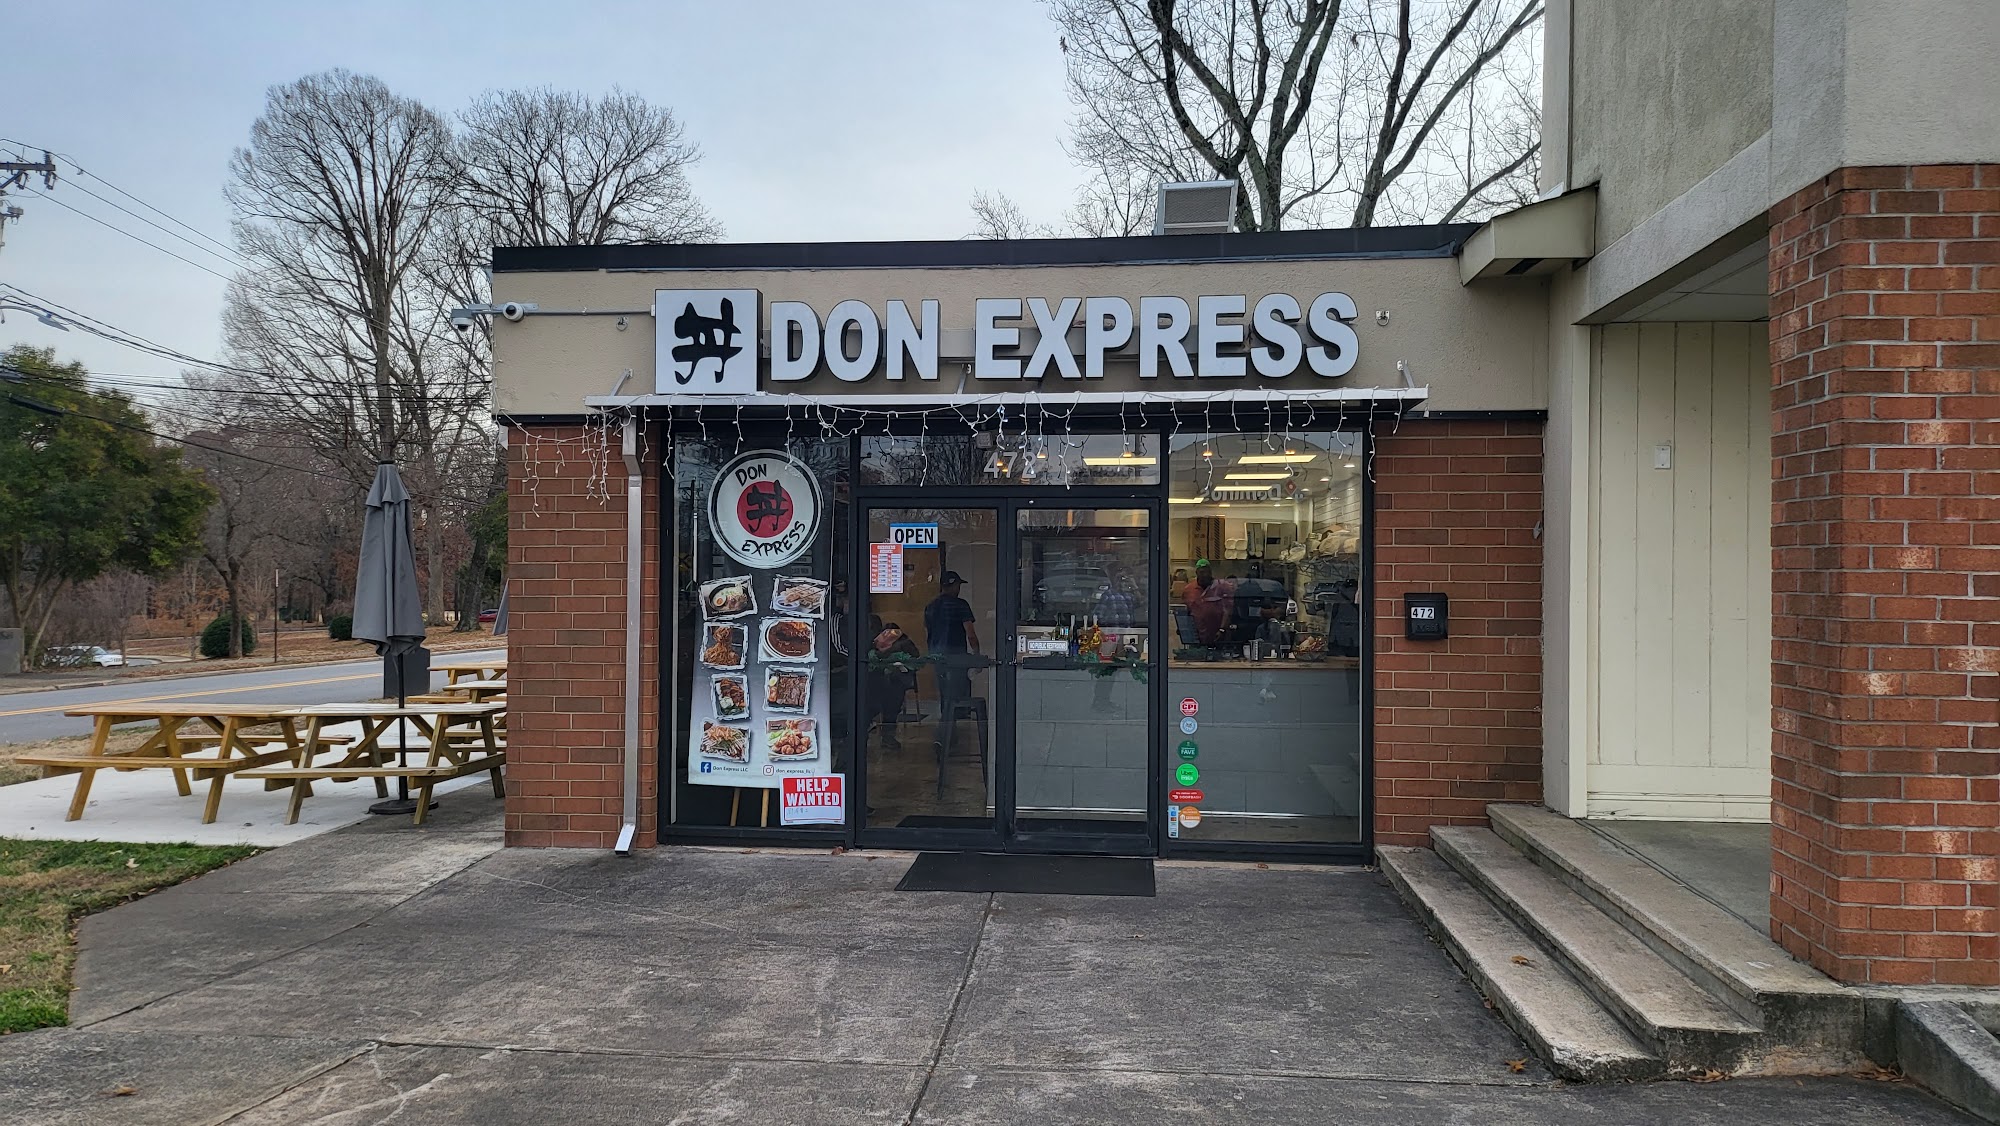 Don Express